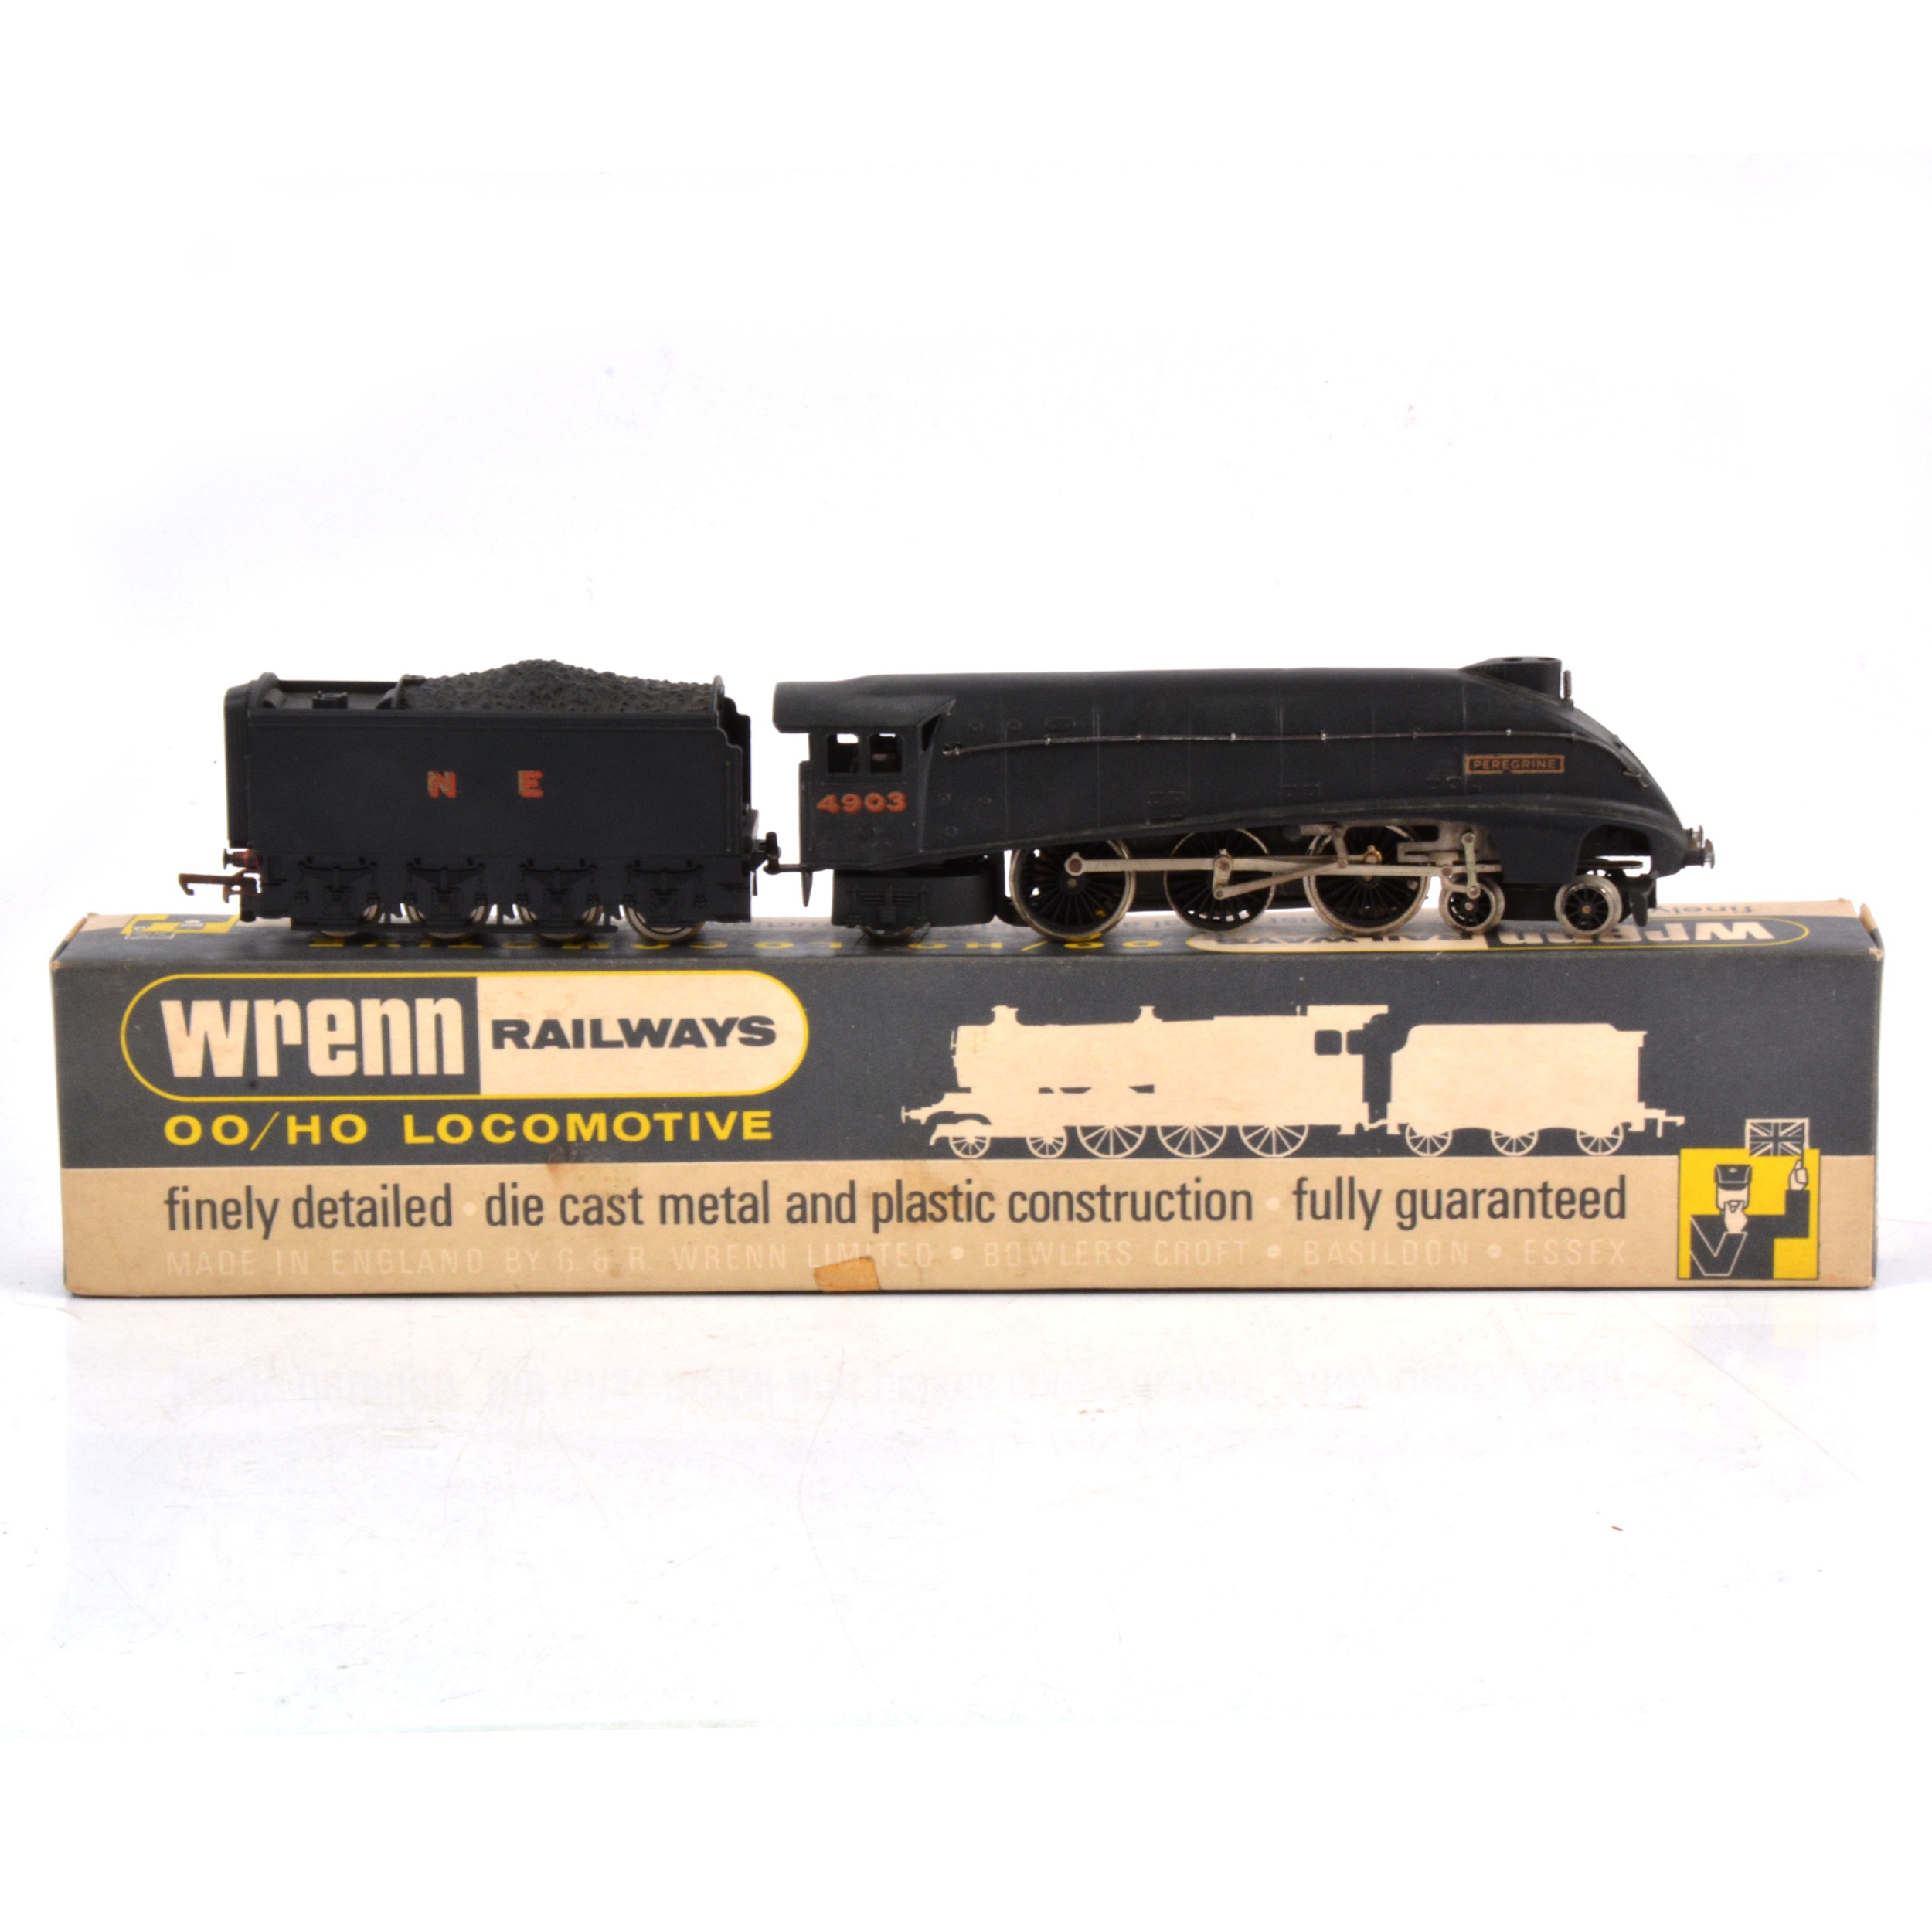 Wrenn OO gauge model railway locomotive, W2213 4-6-2 class A4 'Peregrine', boxed.